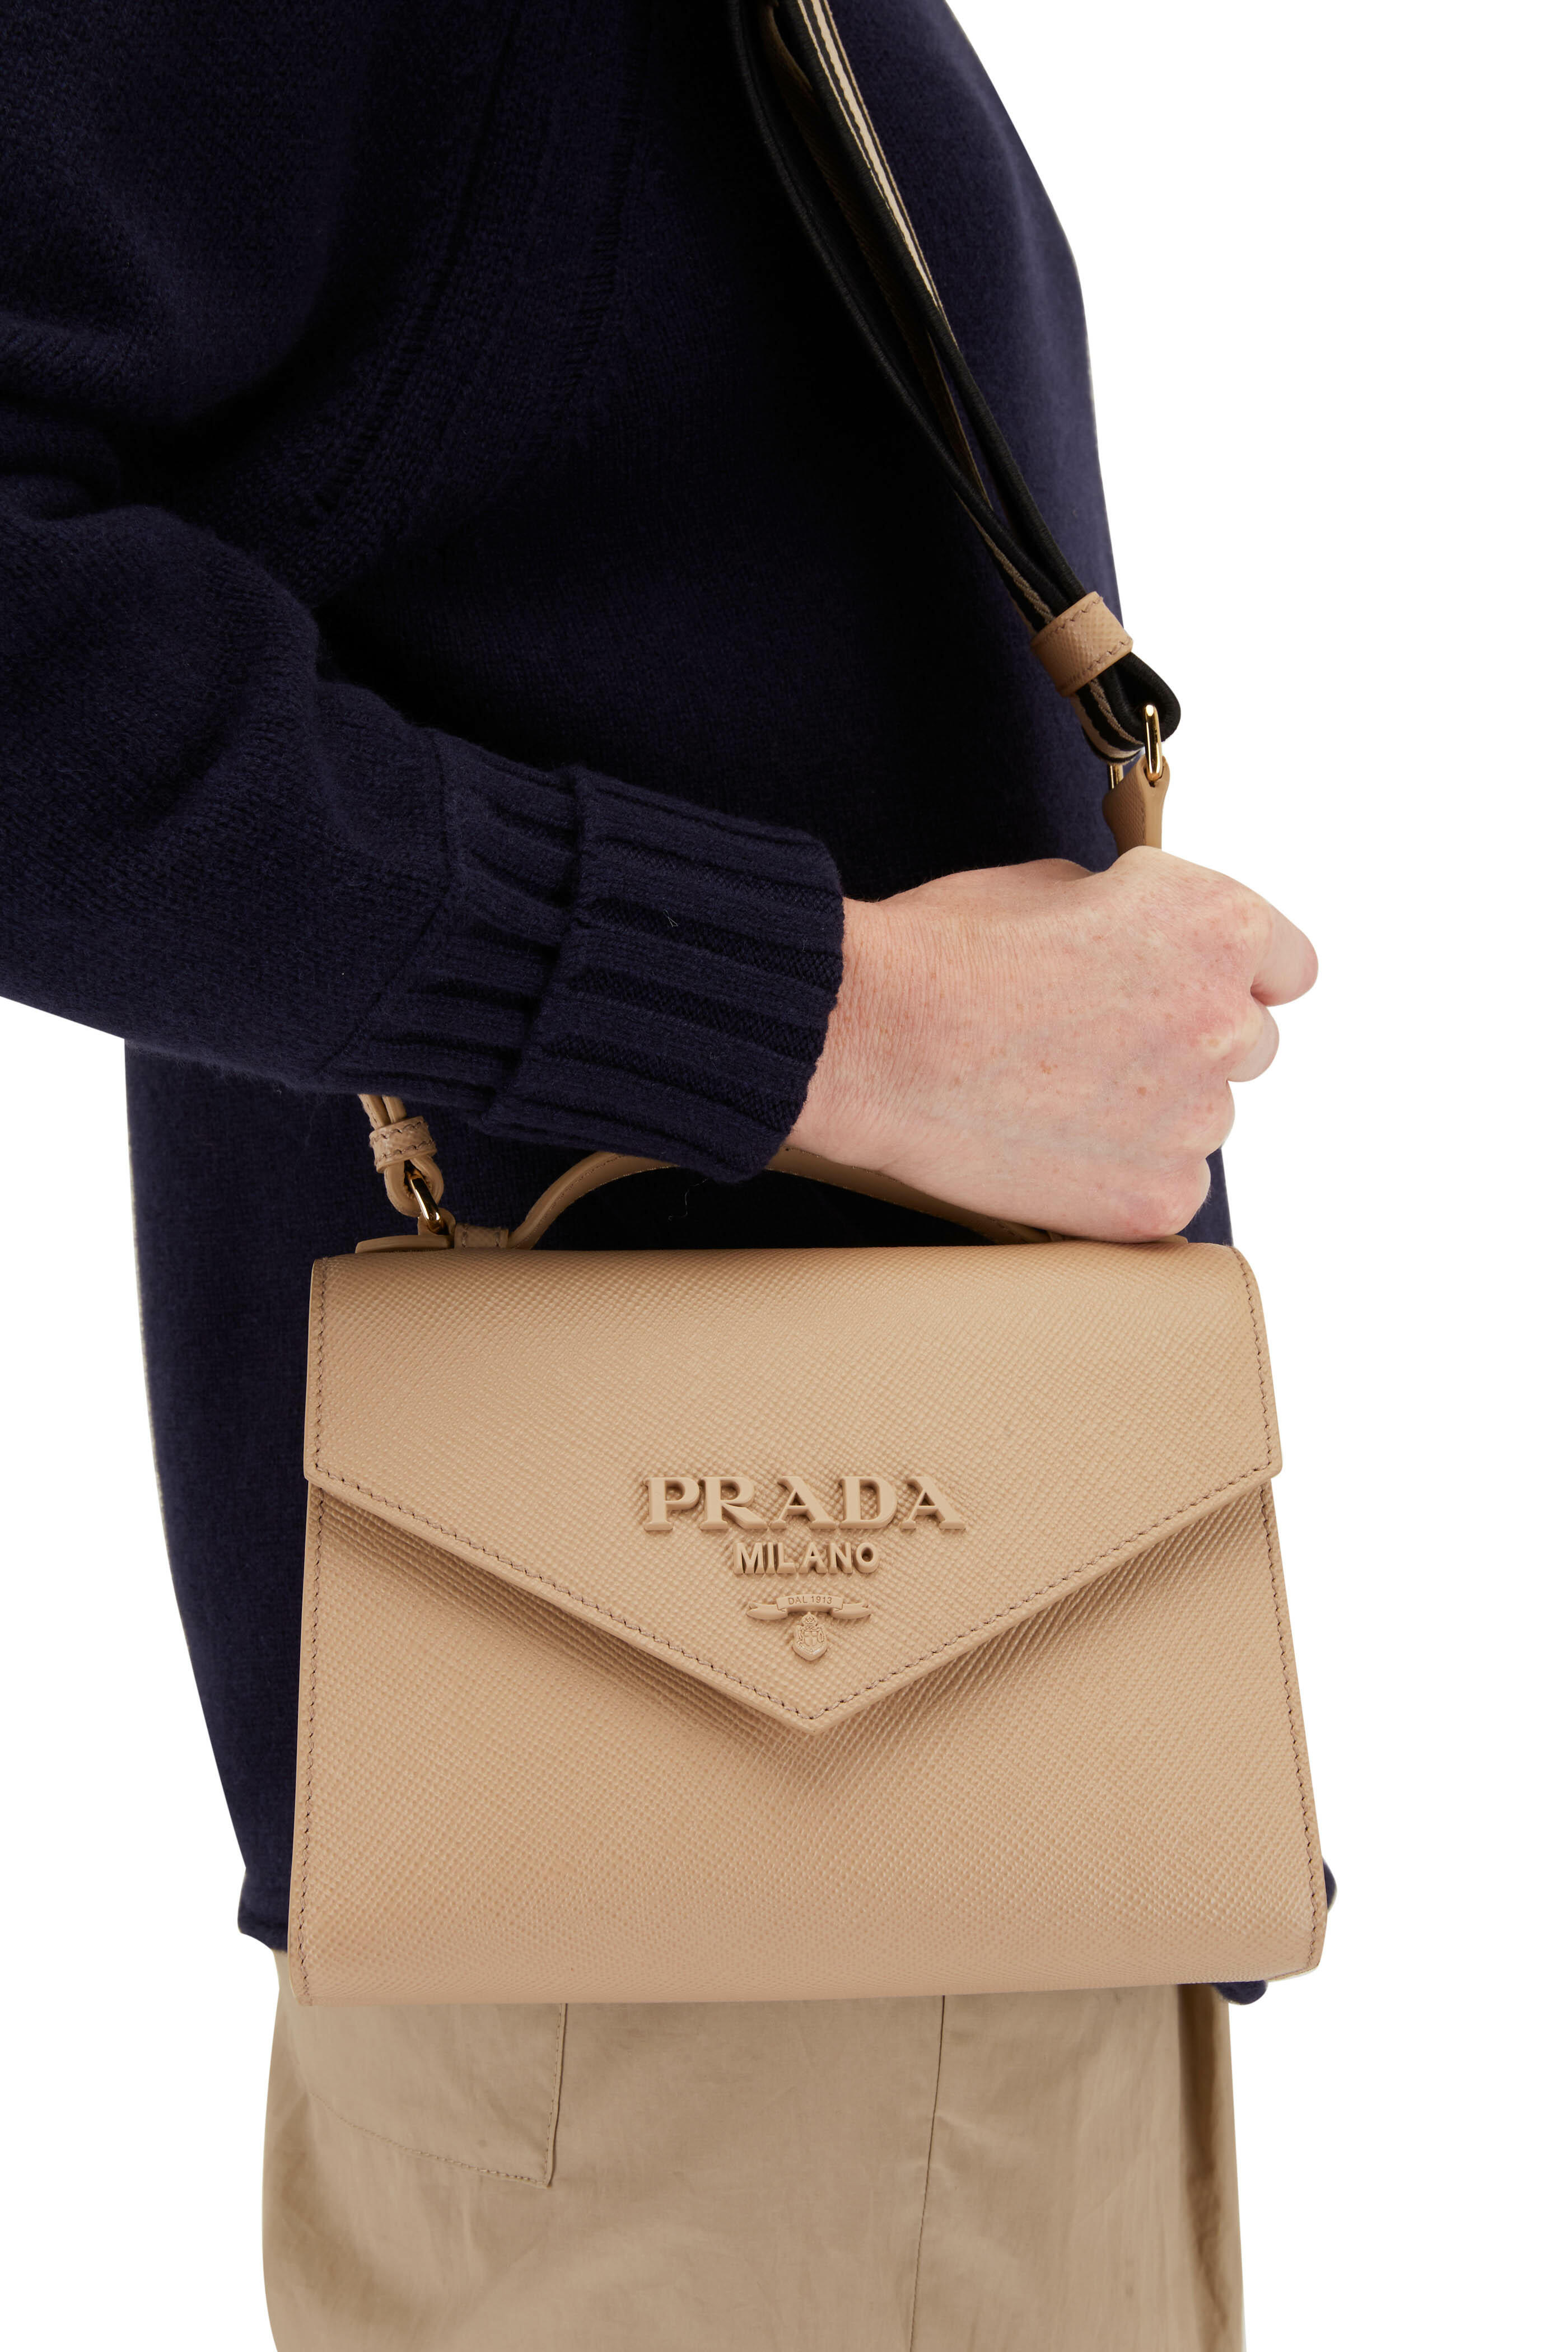 PRADA medium Saffiano Leather Monochrome Bag, Women's Fashion